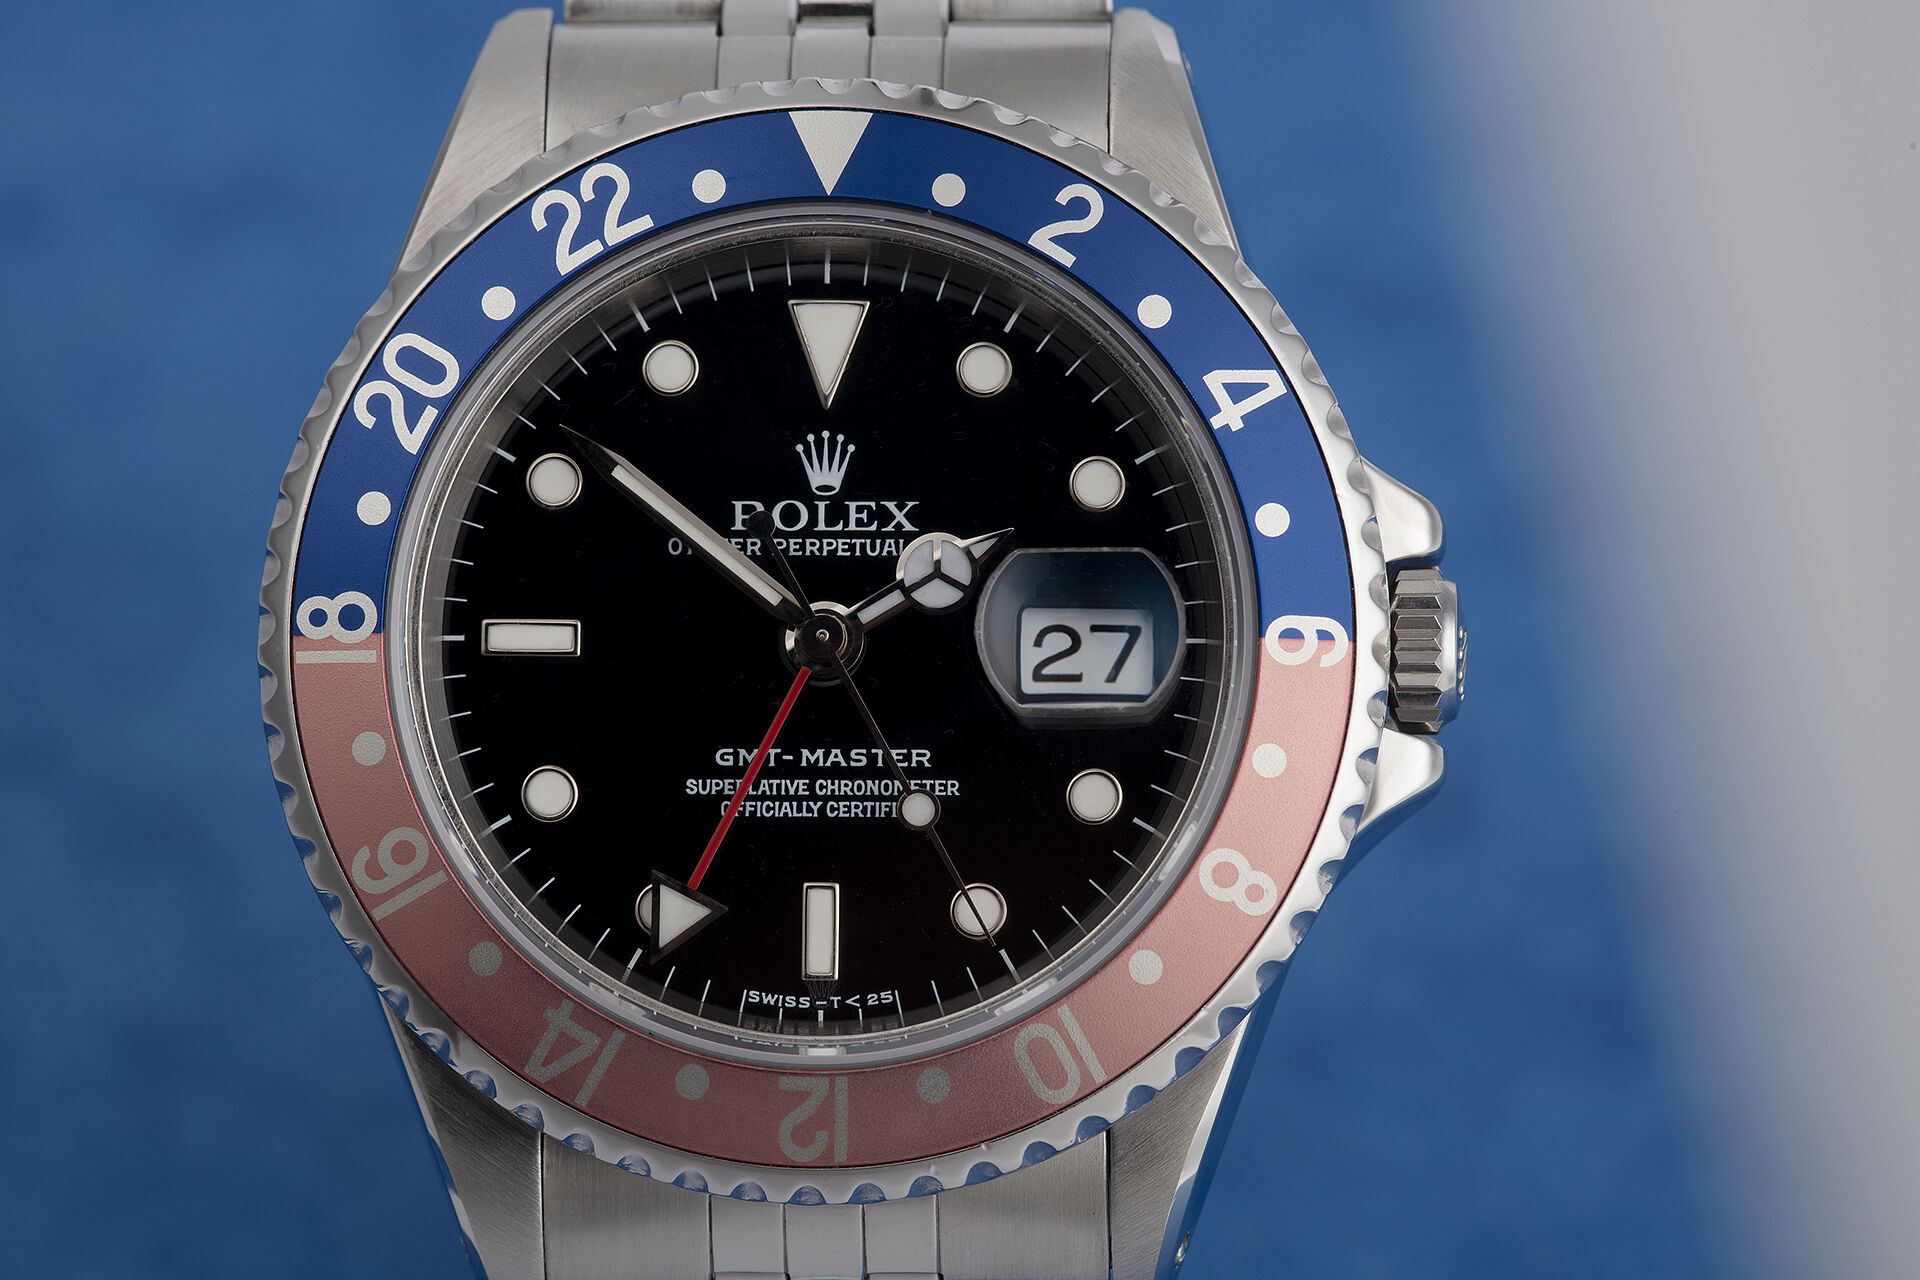 ref 16700 | Rolex Serviced - 'Final Tritium Dial' | Rolex GMT-Master